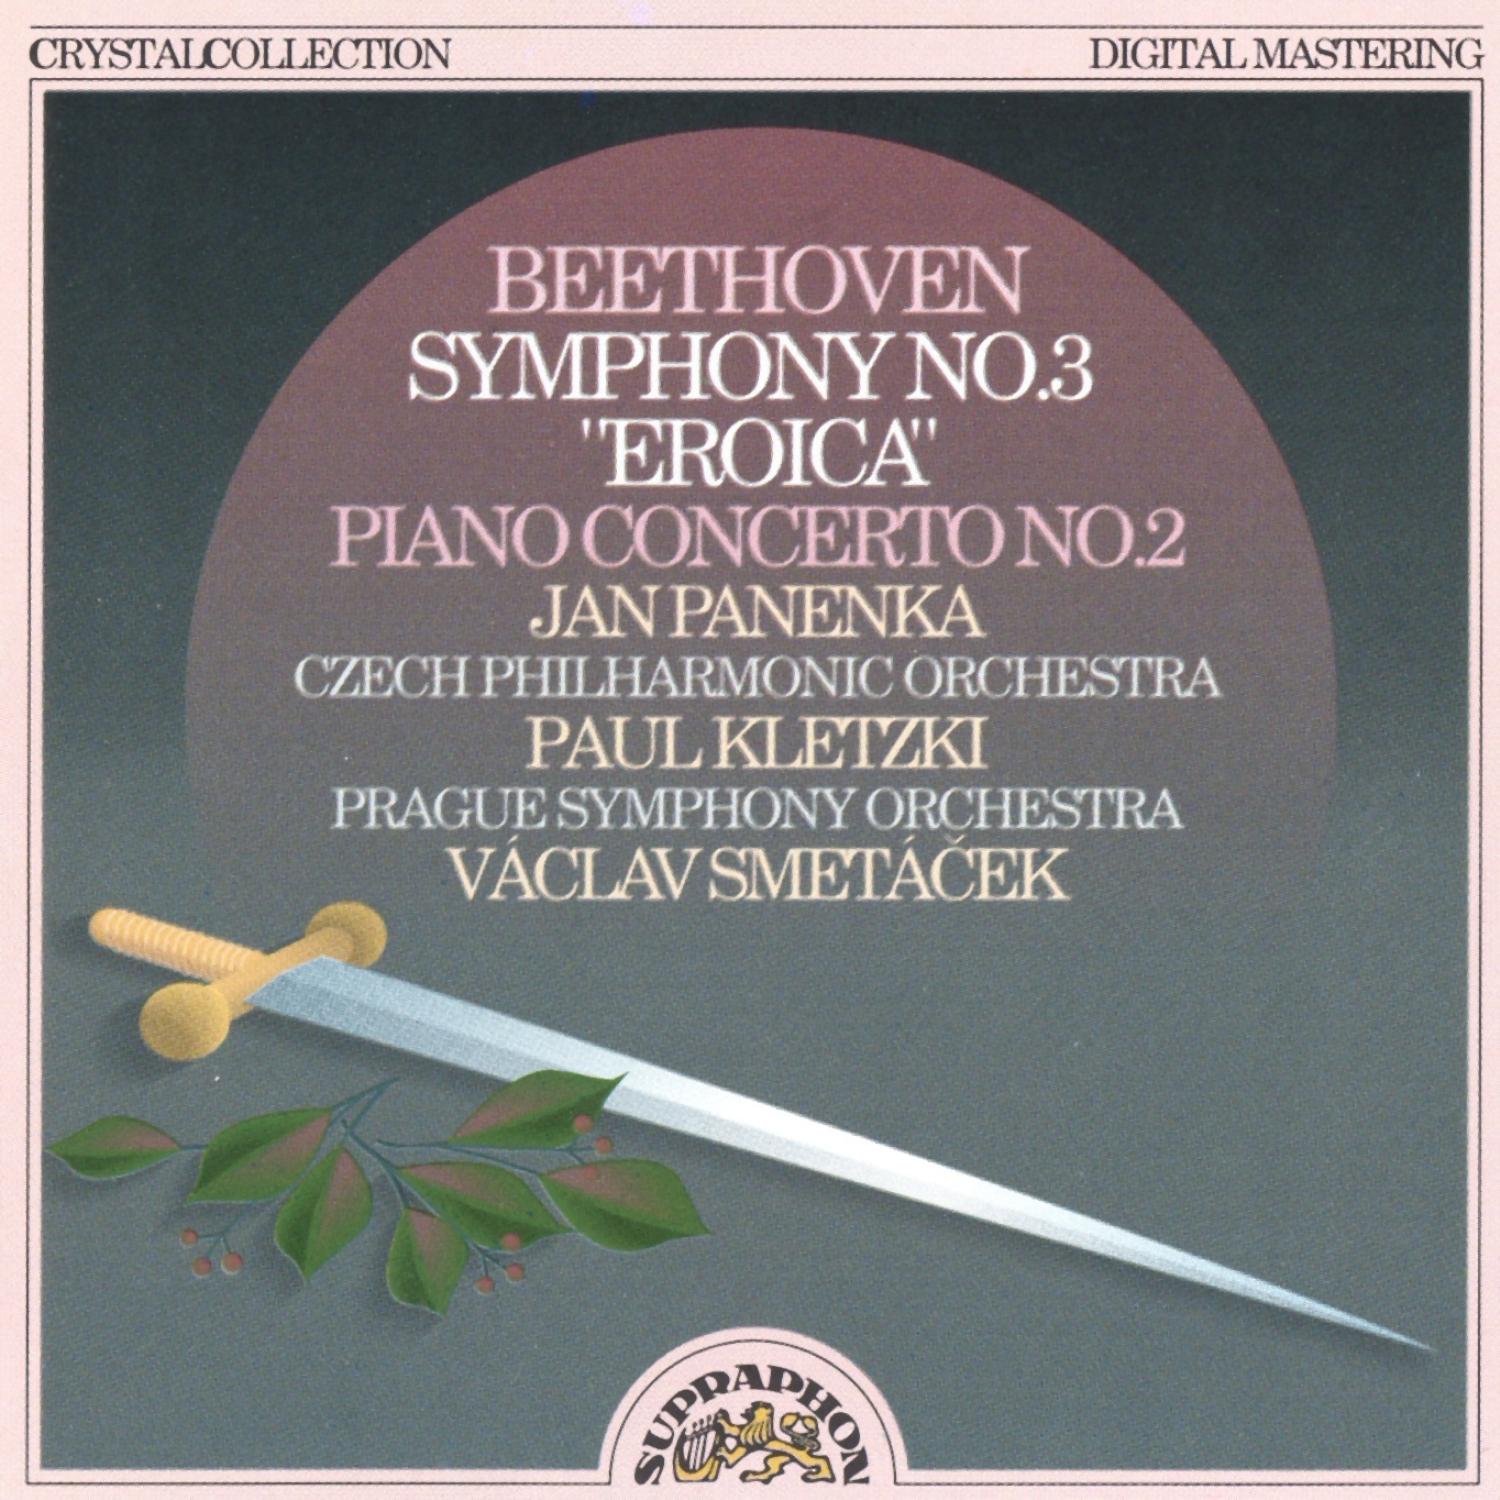 Symphony No. 3 in E-flat major "Eroica", Op. 55: I. Allegro con brio